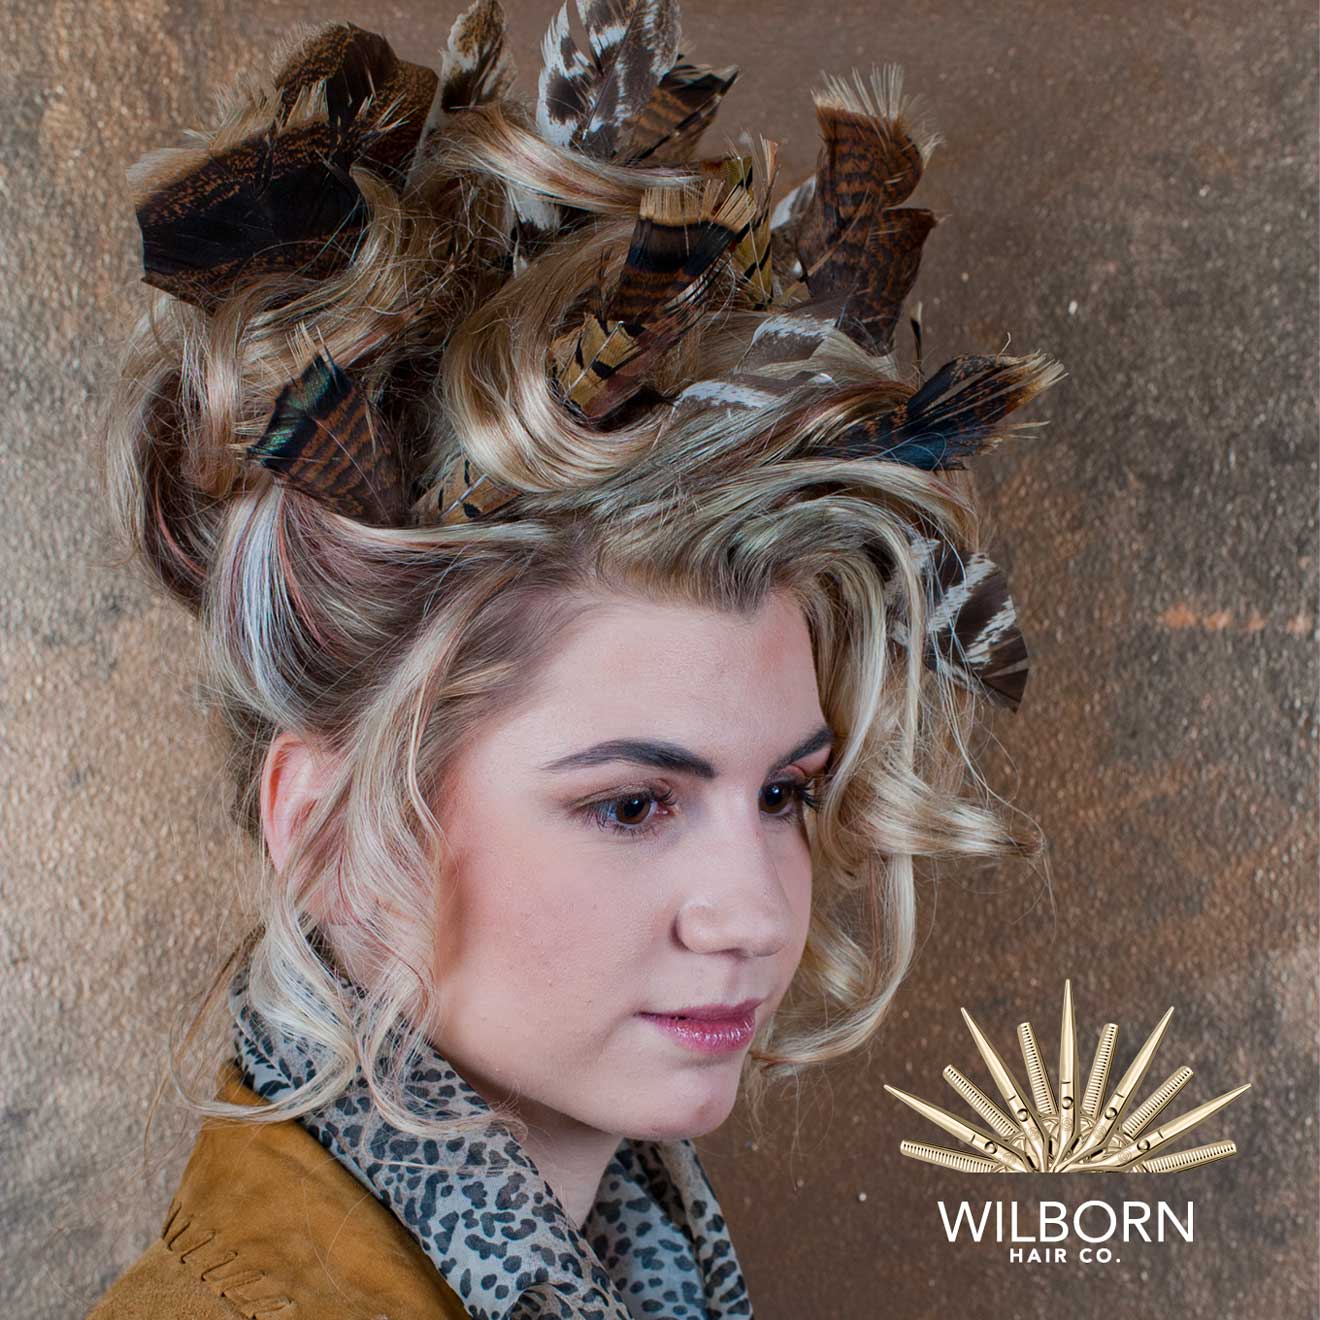 Image Copyright Wilborn Hair Co.